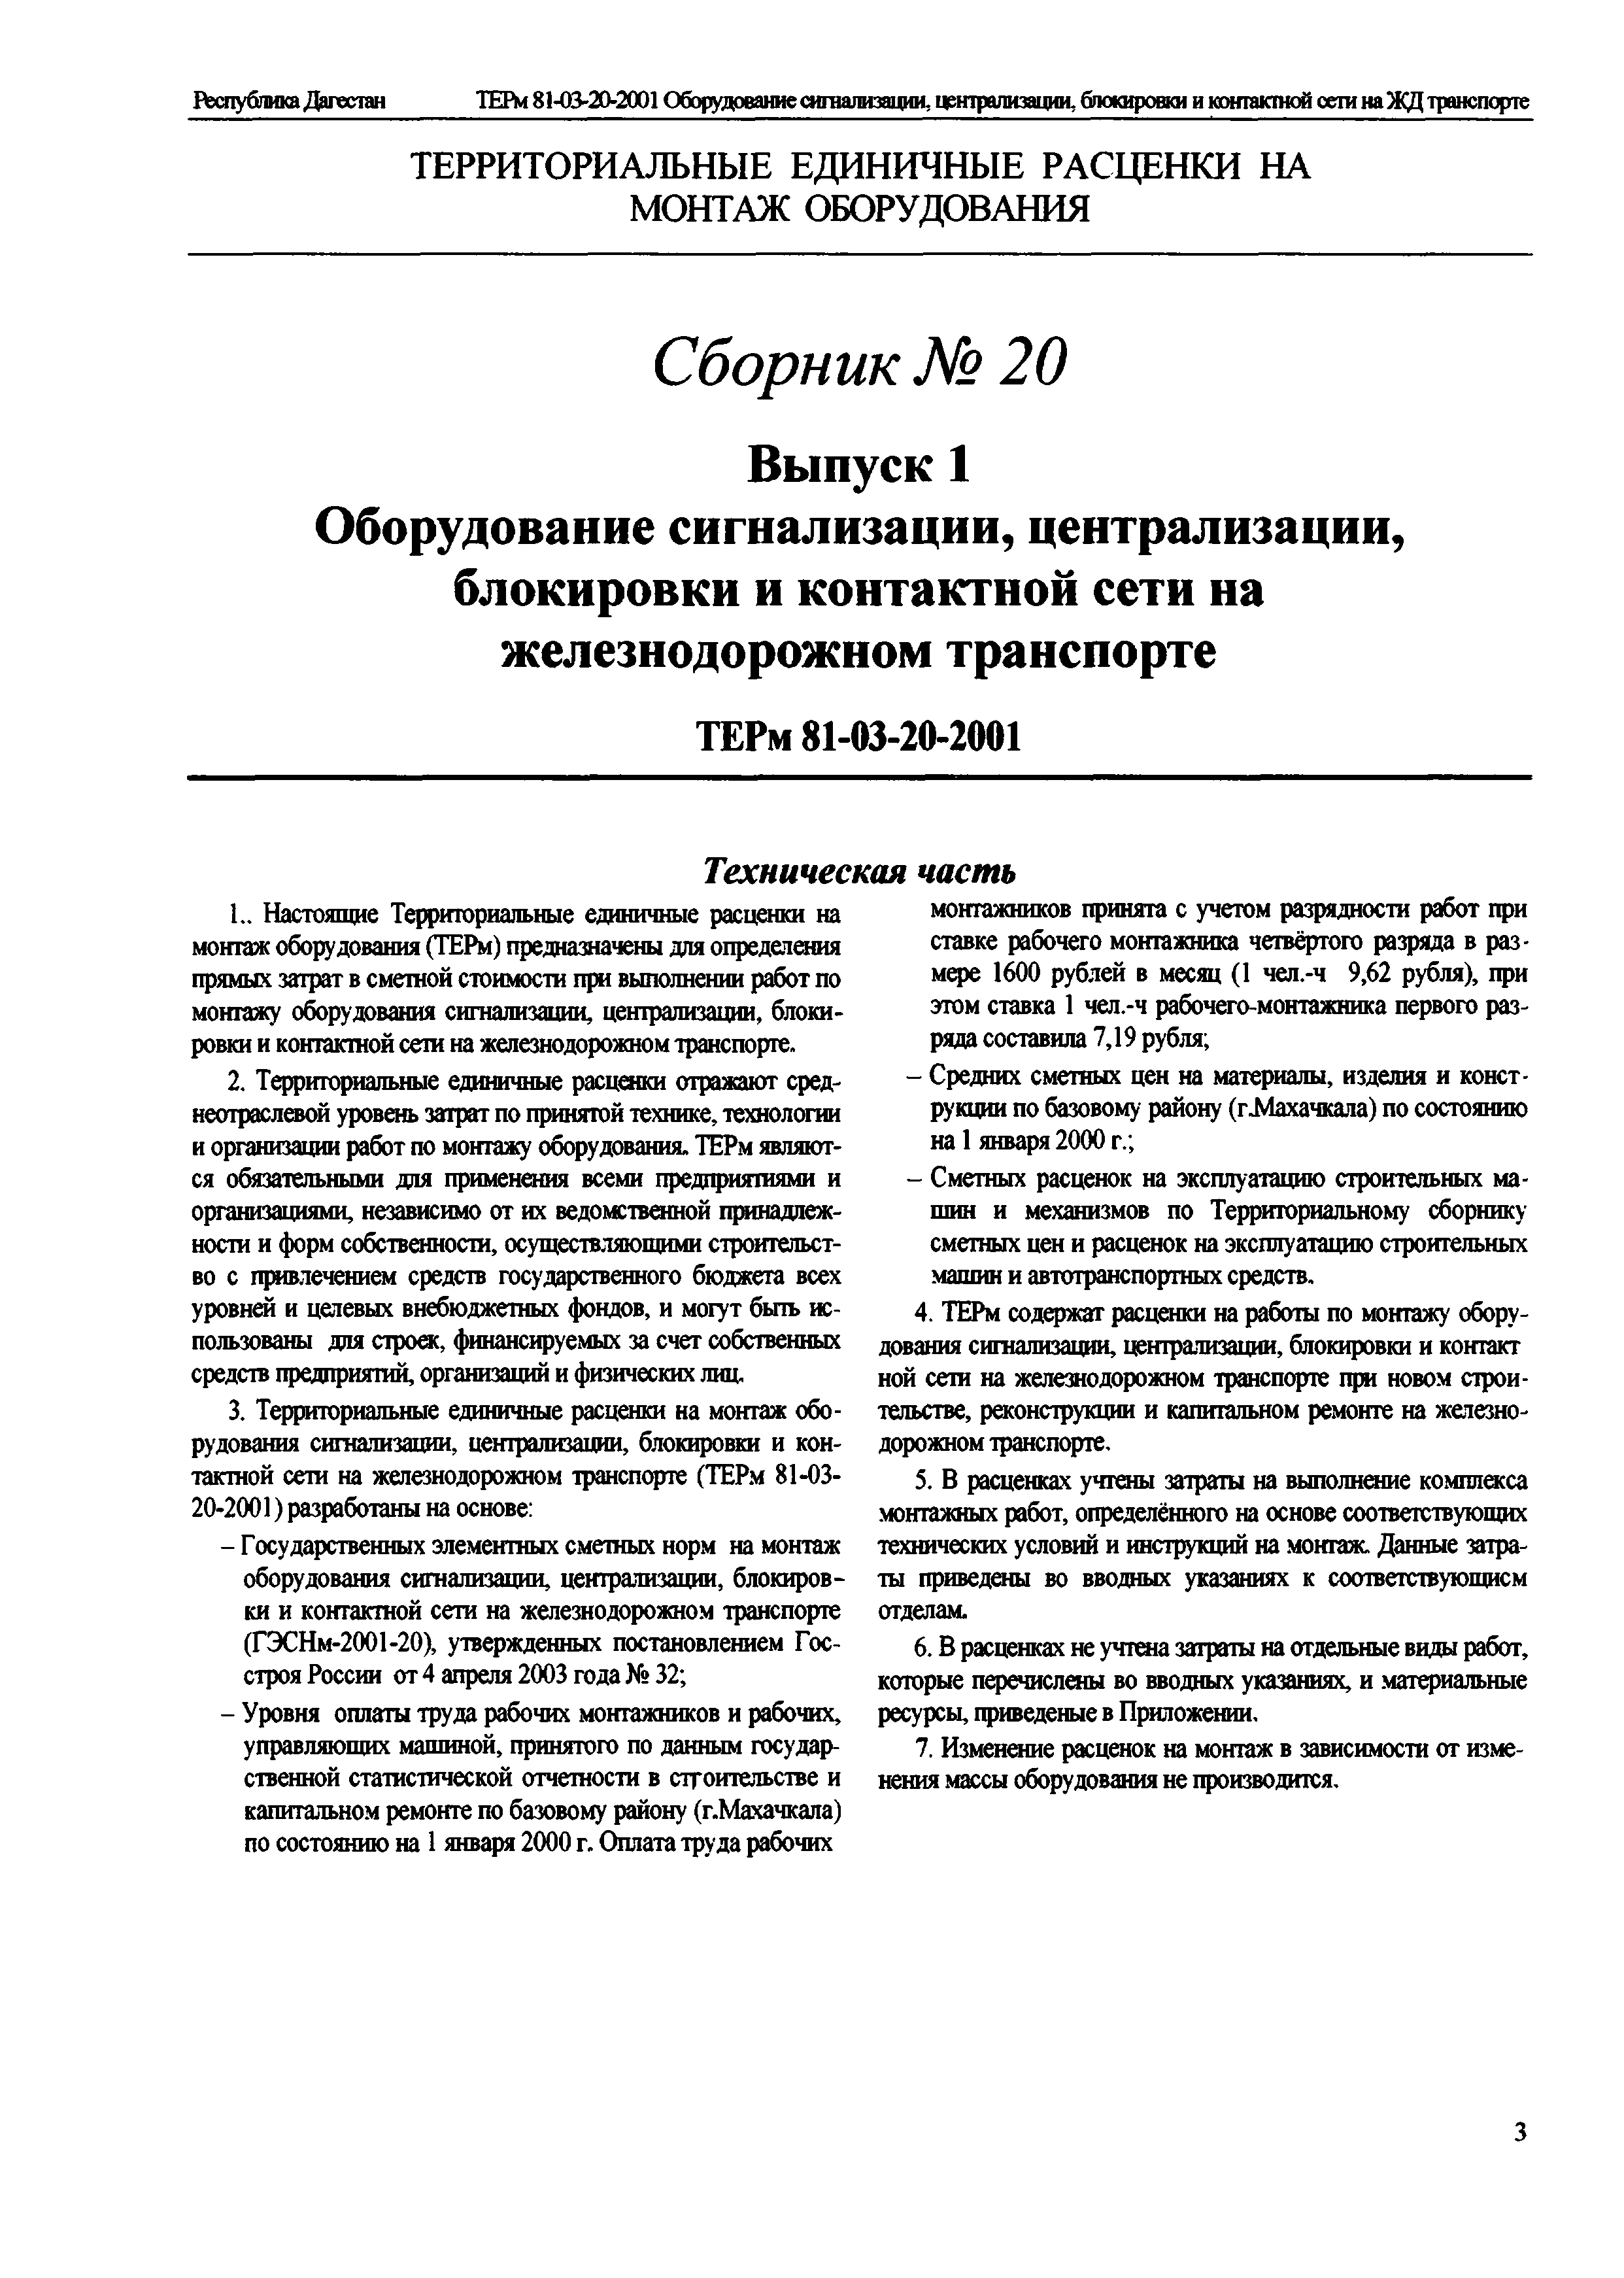 ТЕРм Республика Дагестан 2001-20